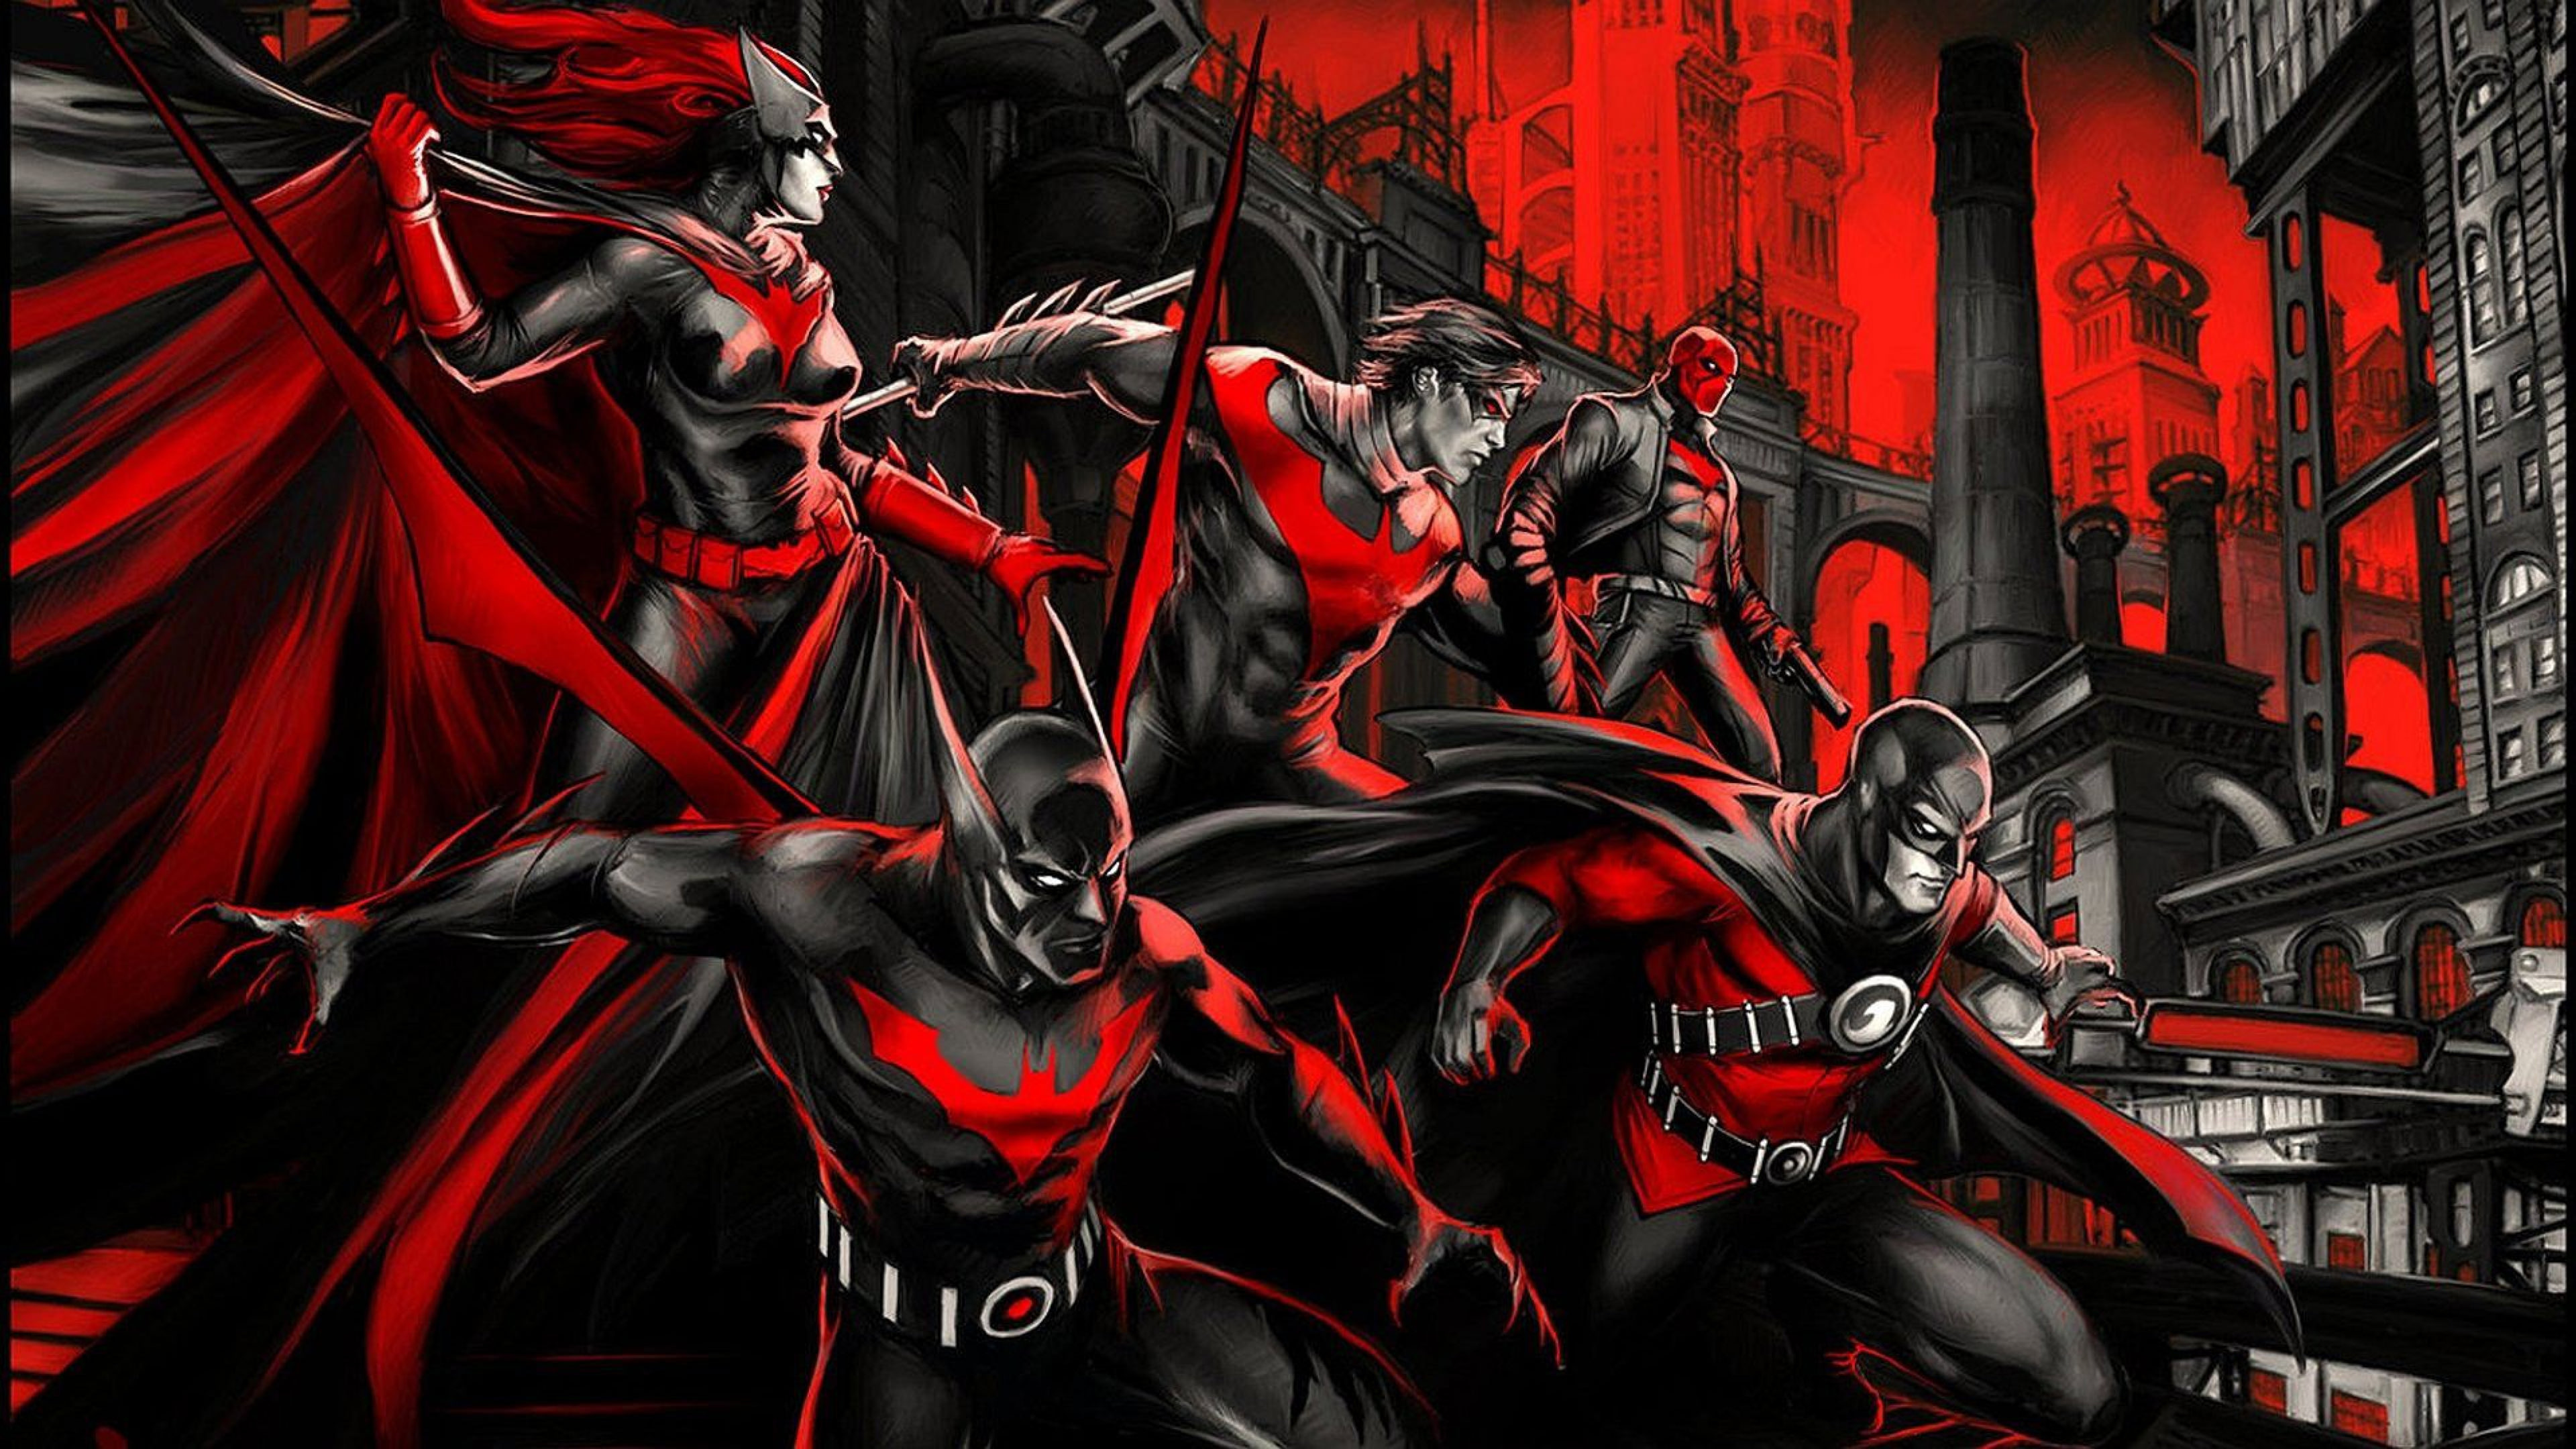 Batwoman image background (2019)